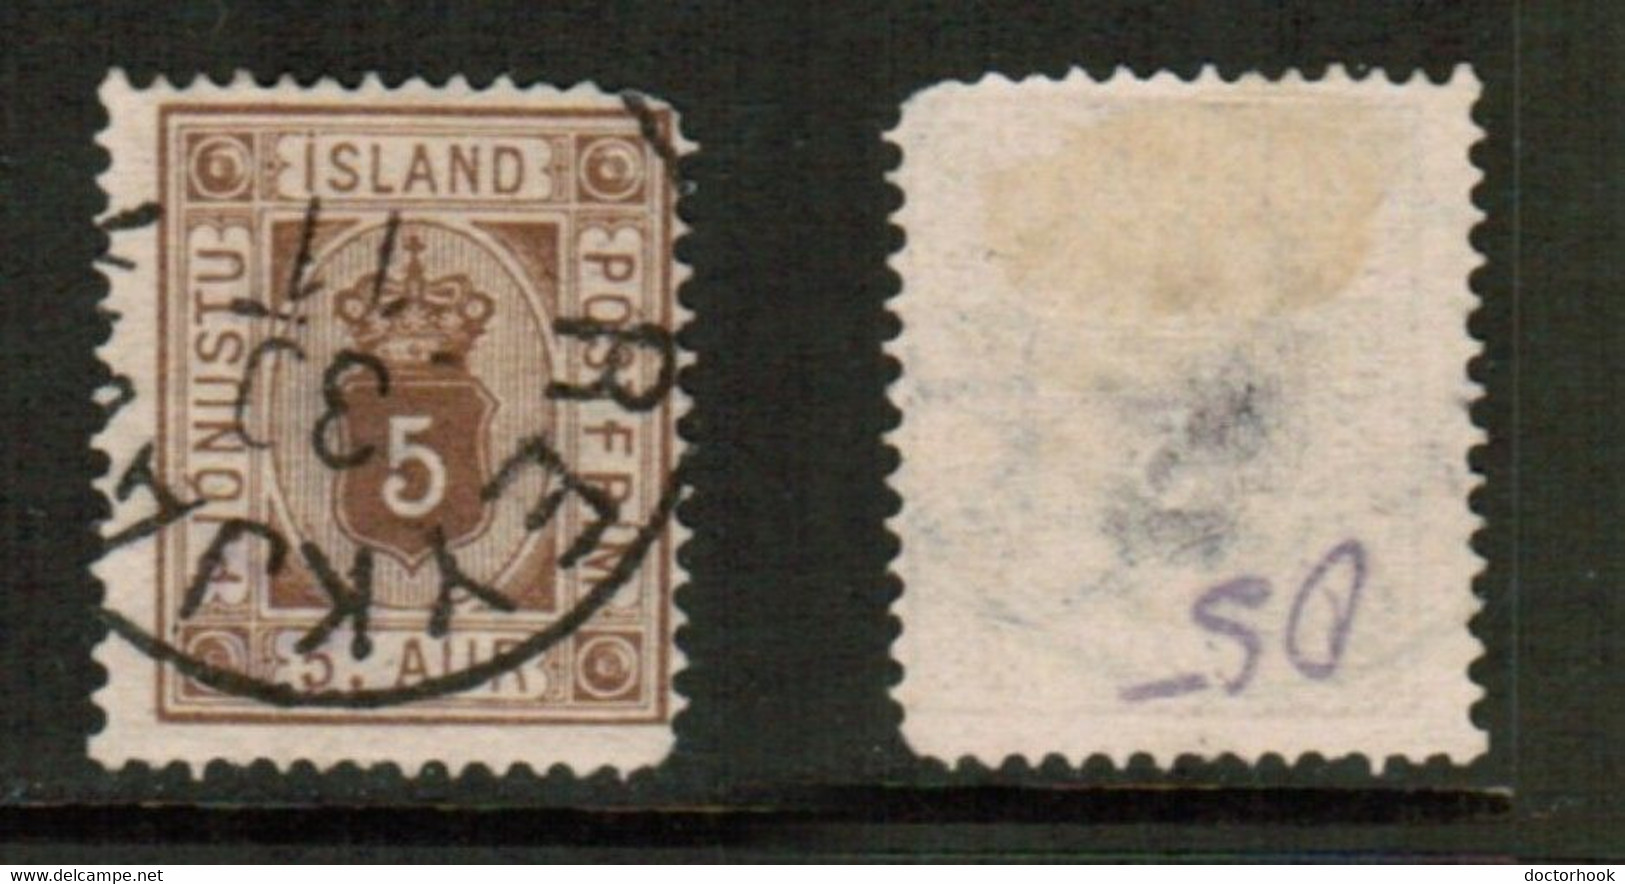 DENMARK   Scott # O 5 USED (CONDITION AS PER SCAN) (Stamp Scan # 867-18) - Dienstzegels